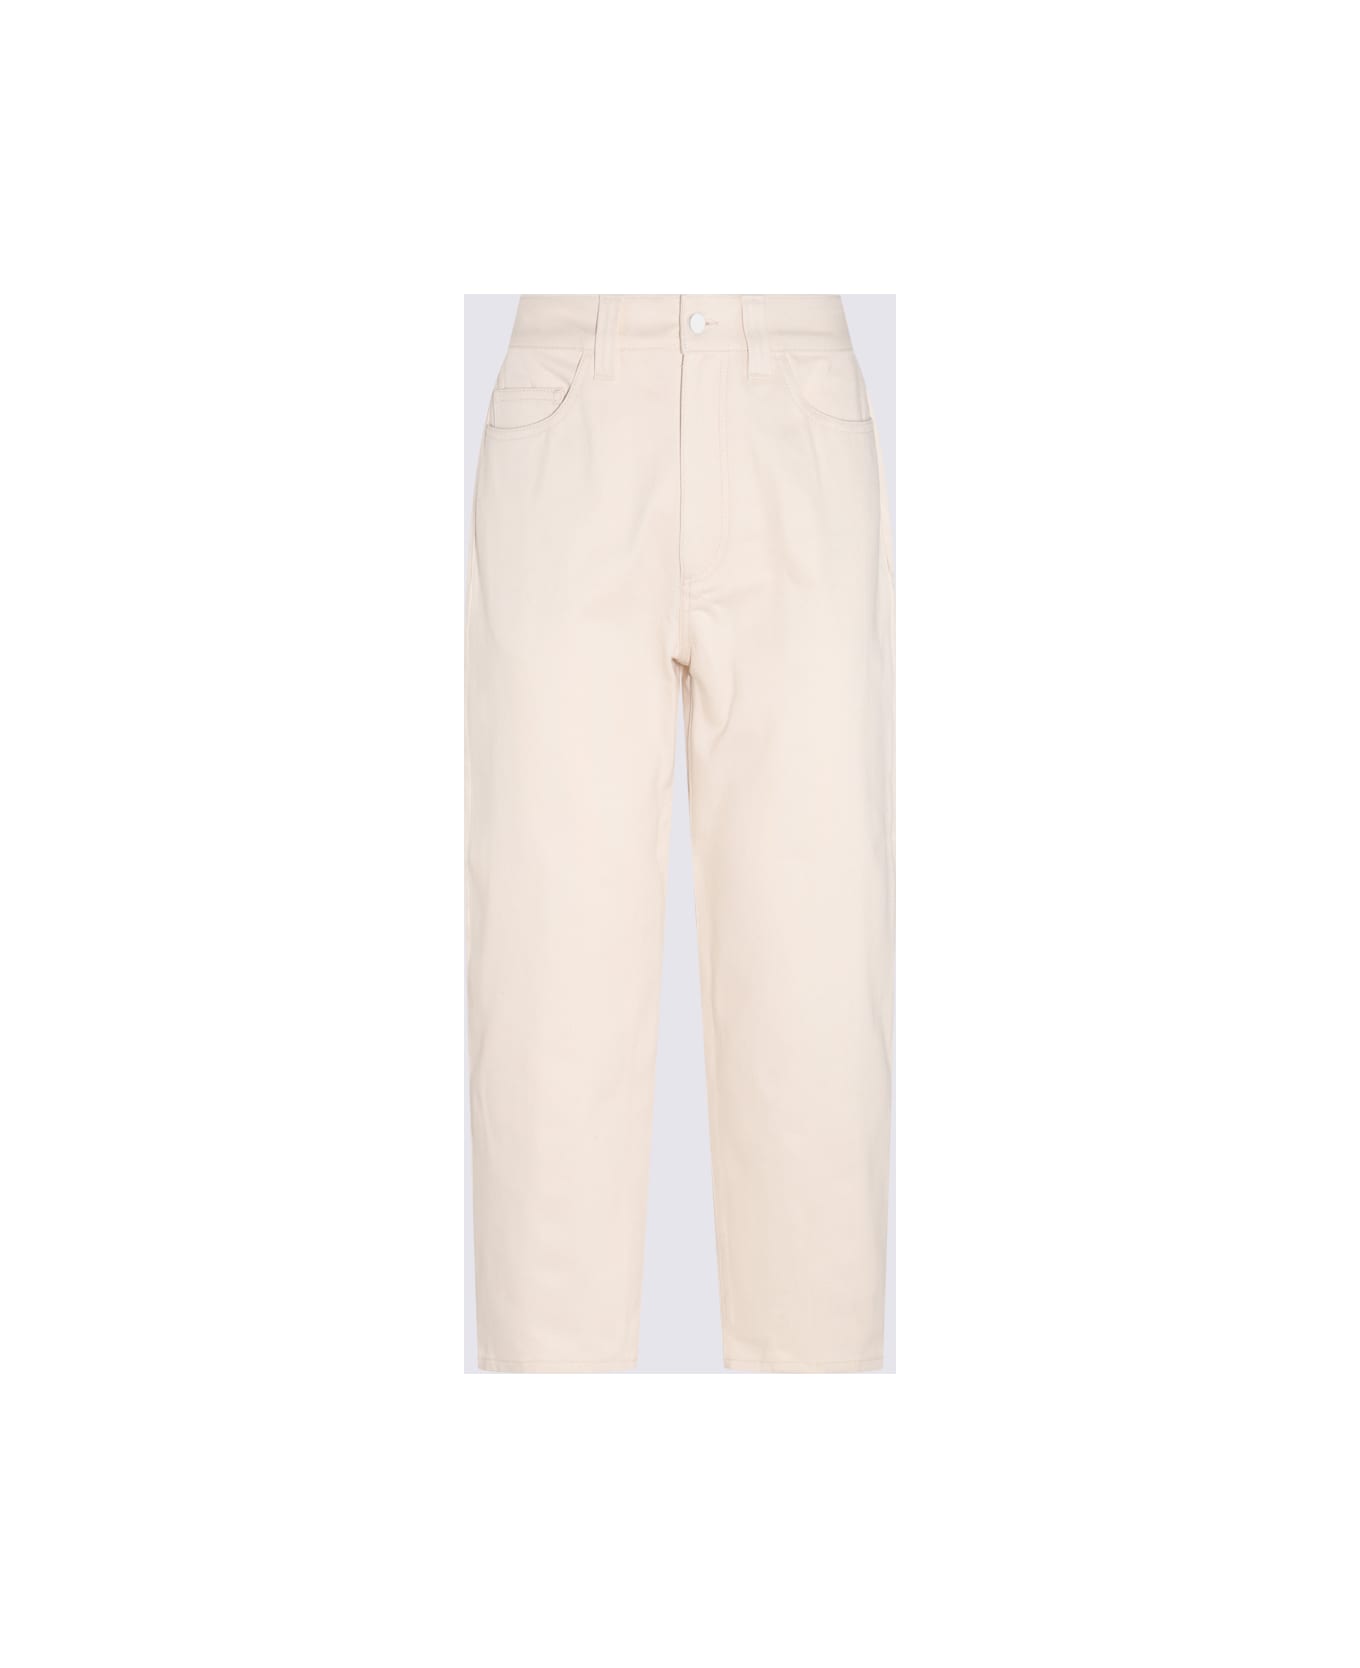 Sunnei Ecru White Stripes Cotton Pants - ECRU WHITE STRIPES ボトムス